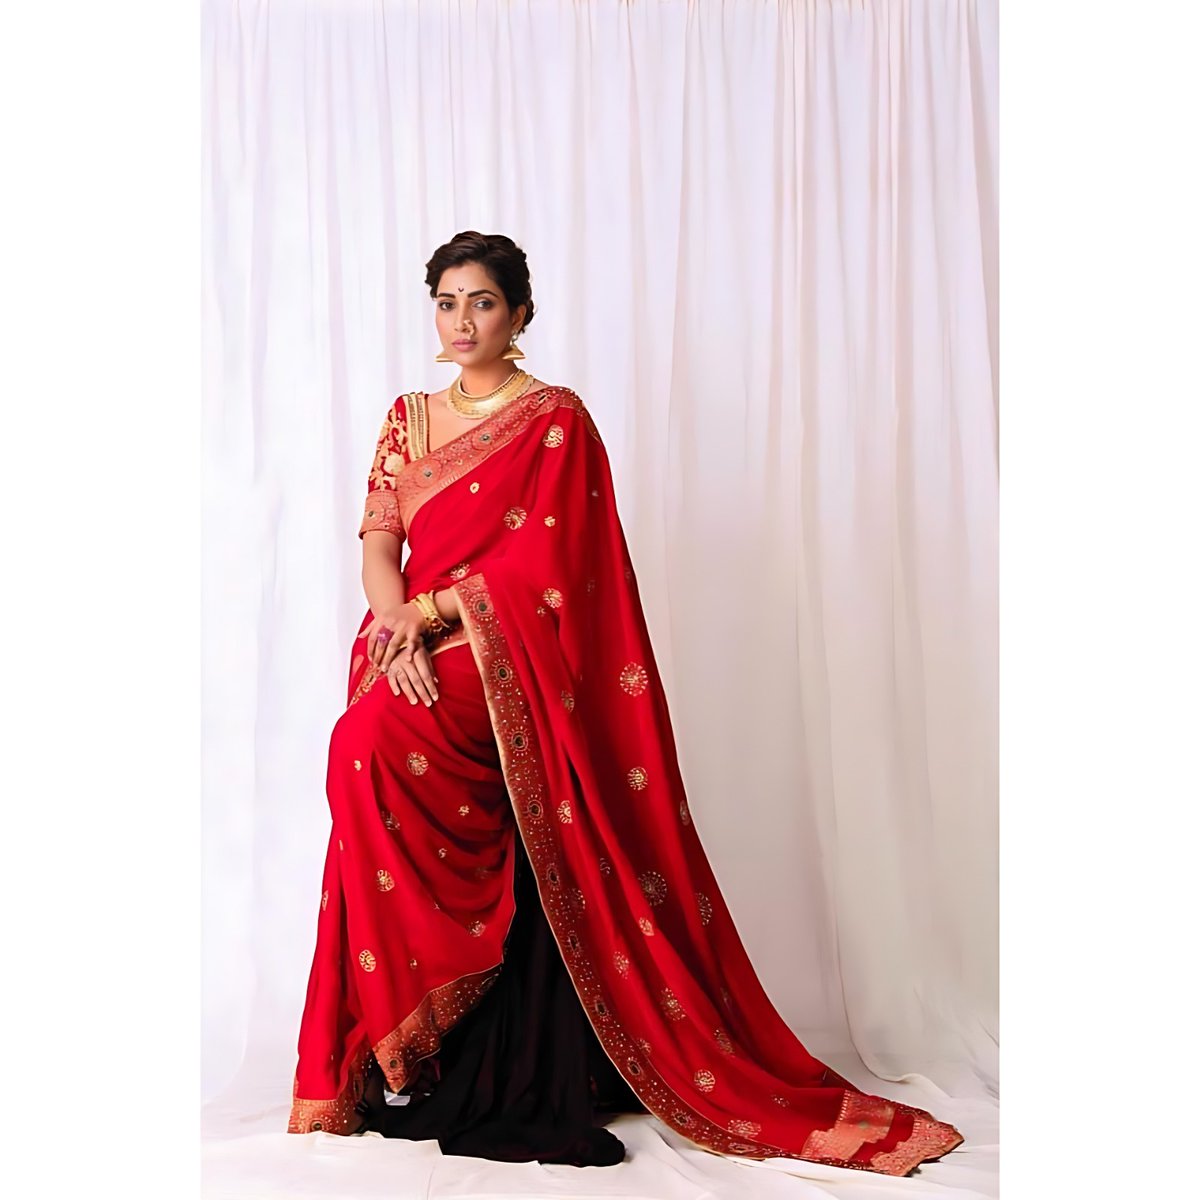 Red saree...😍
Royal look...💘
Radiant Rupali Bhosle...❤️

#RupaliBhosle #redsaree #glamrous #looking #traditional #actoress #marathiactress #celebrity #fillamwala